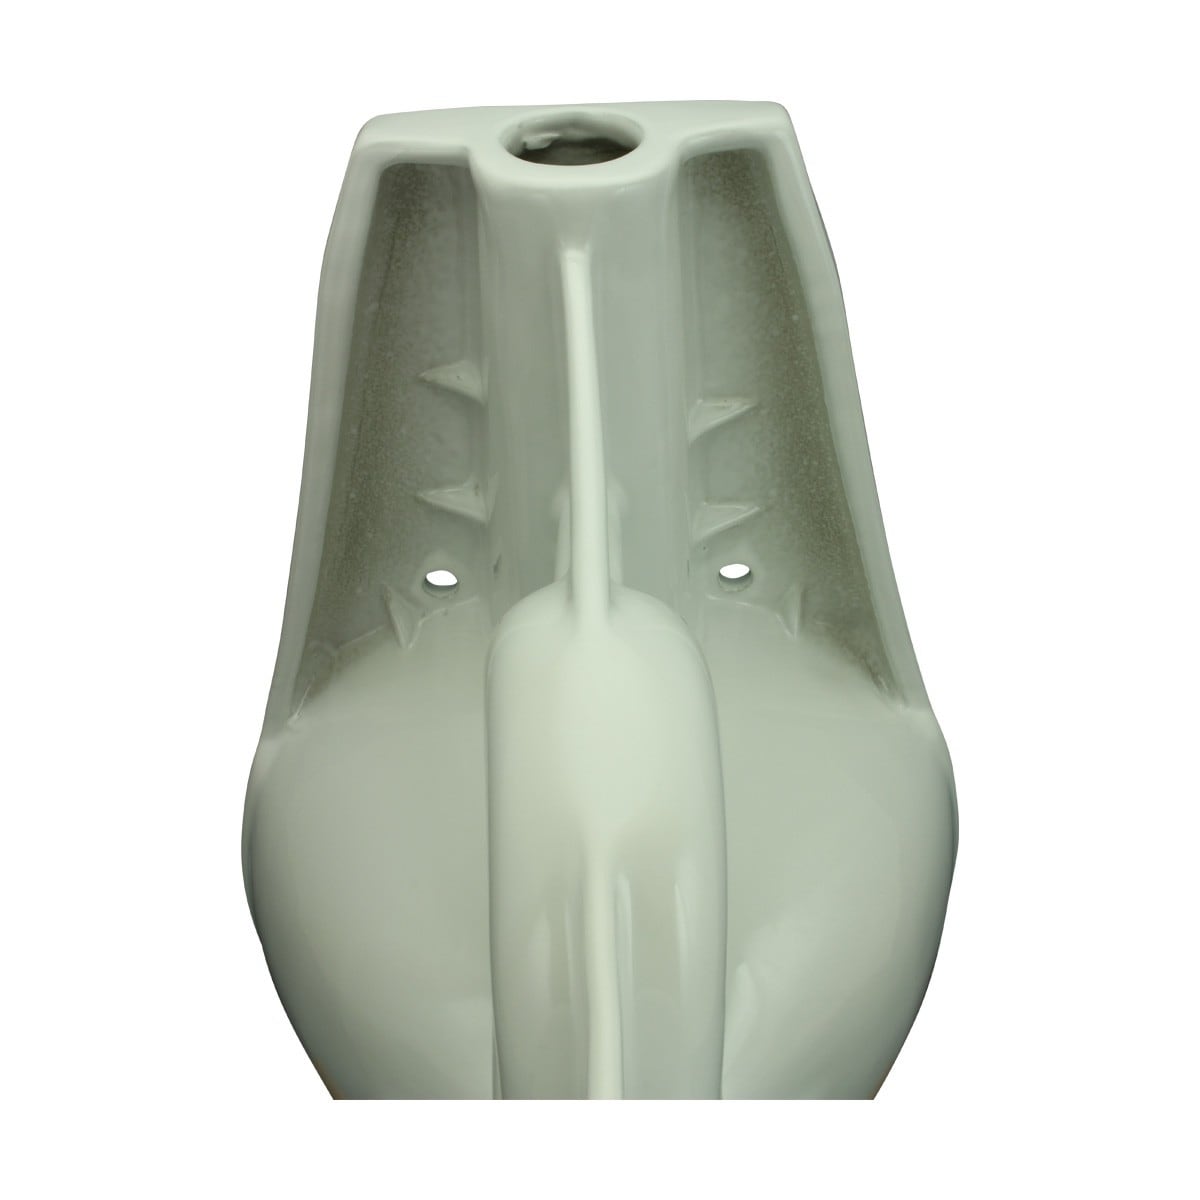 White Vitreous China Porcelain Toilet Bowl Elongated Rear Entry Toilet Bowl For High Tank Toilets Renovators Supply